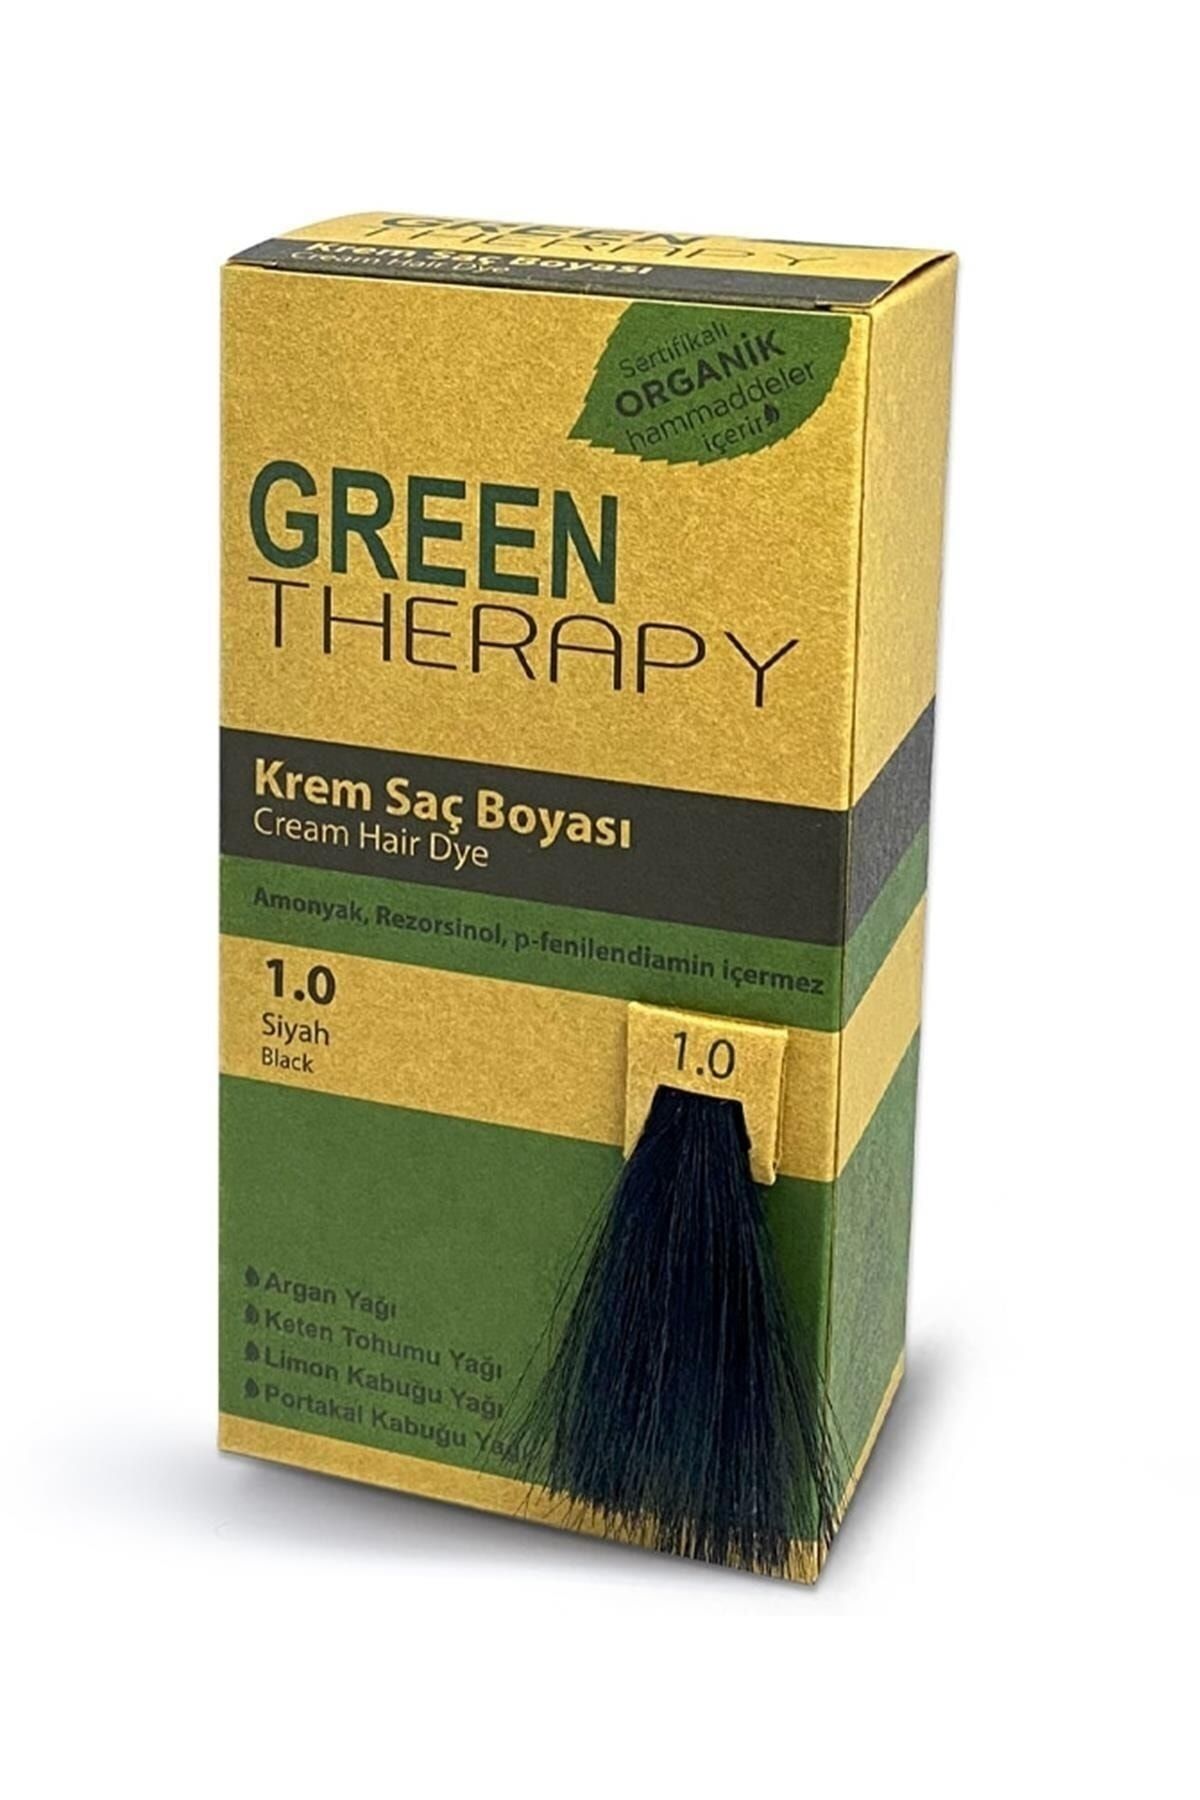 Green Therapy Krem Saç Boyası Argan Yağlı 1.0 Siyah ,,natural1162